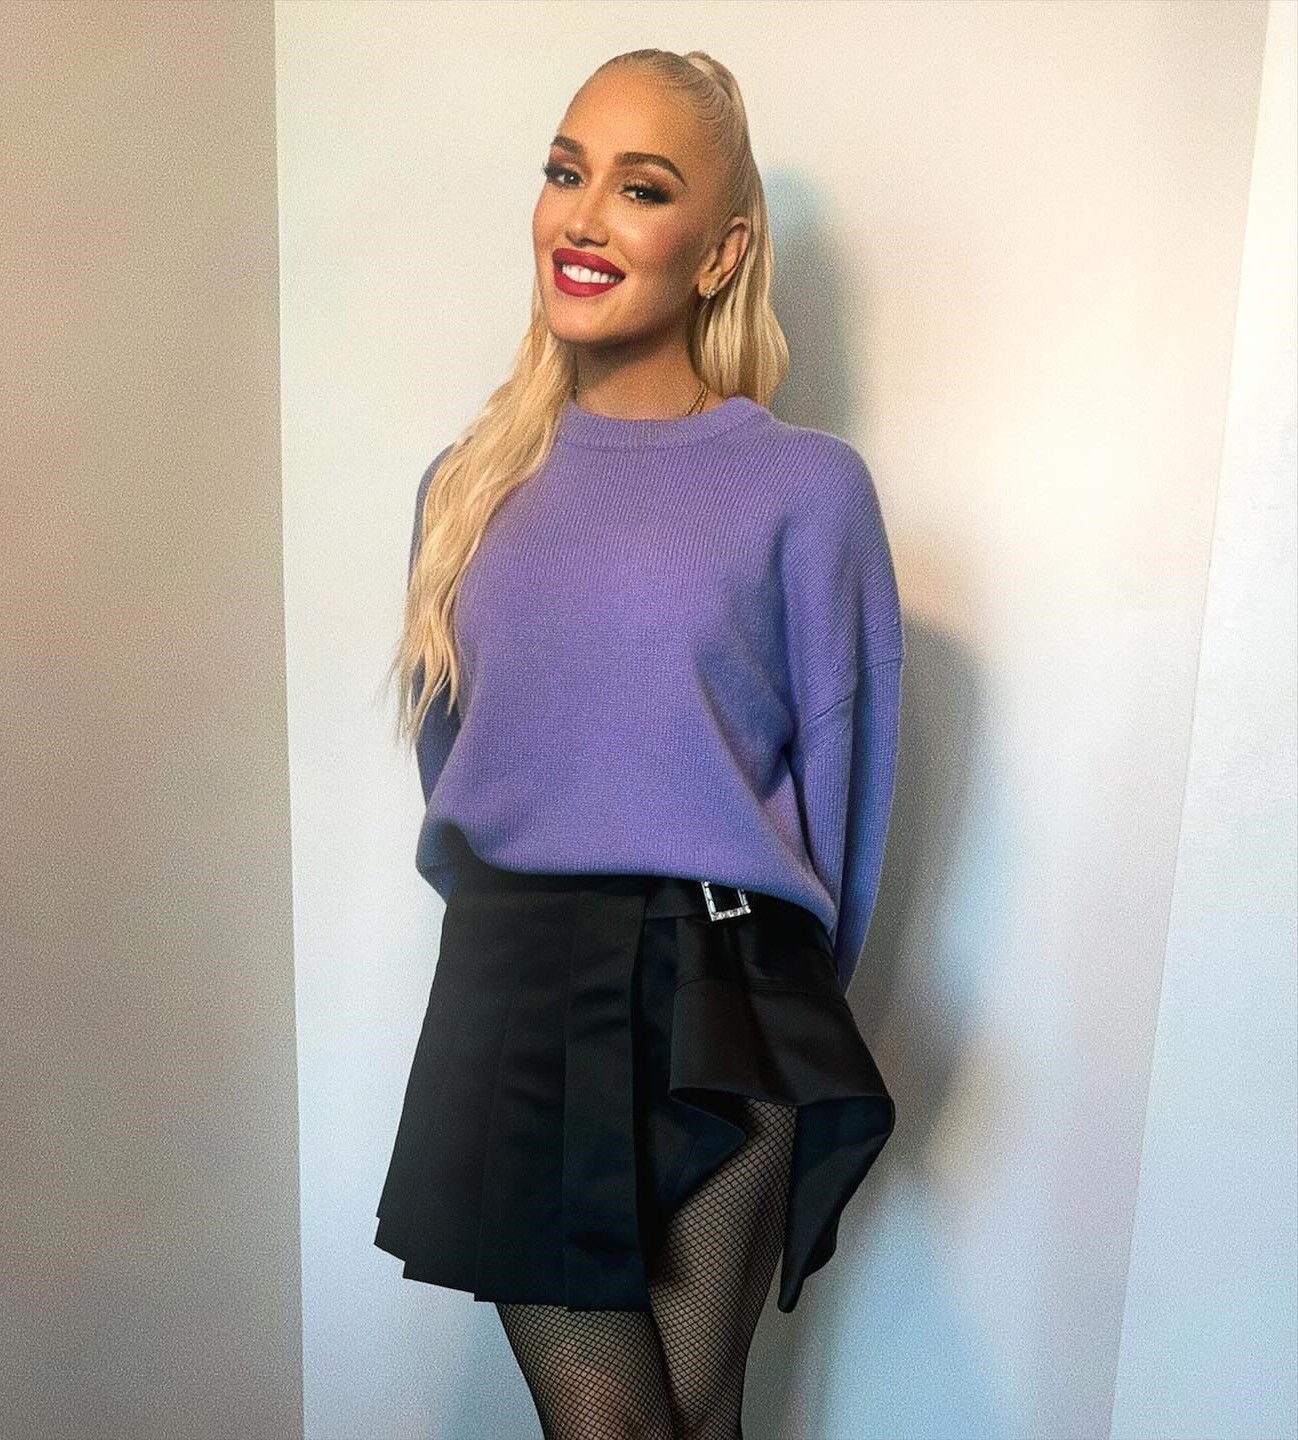 Gwen Stefani – Instagram post